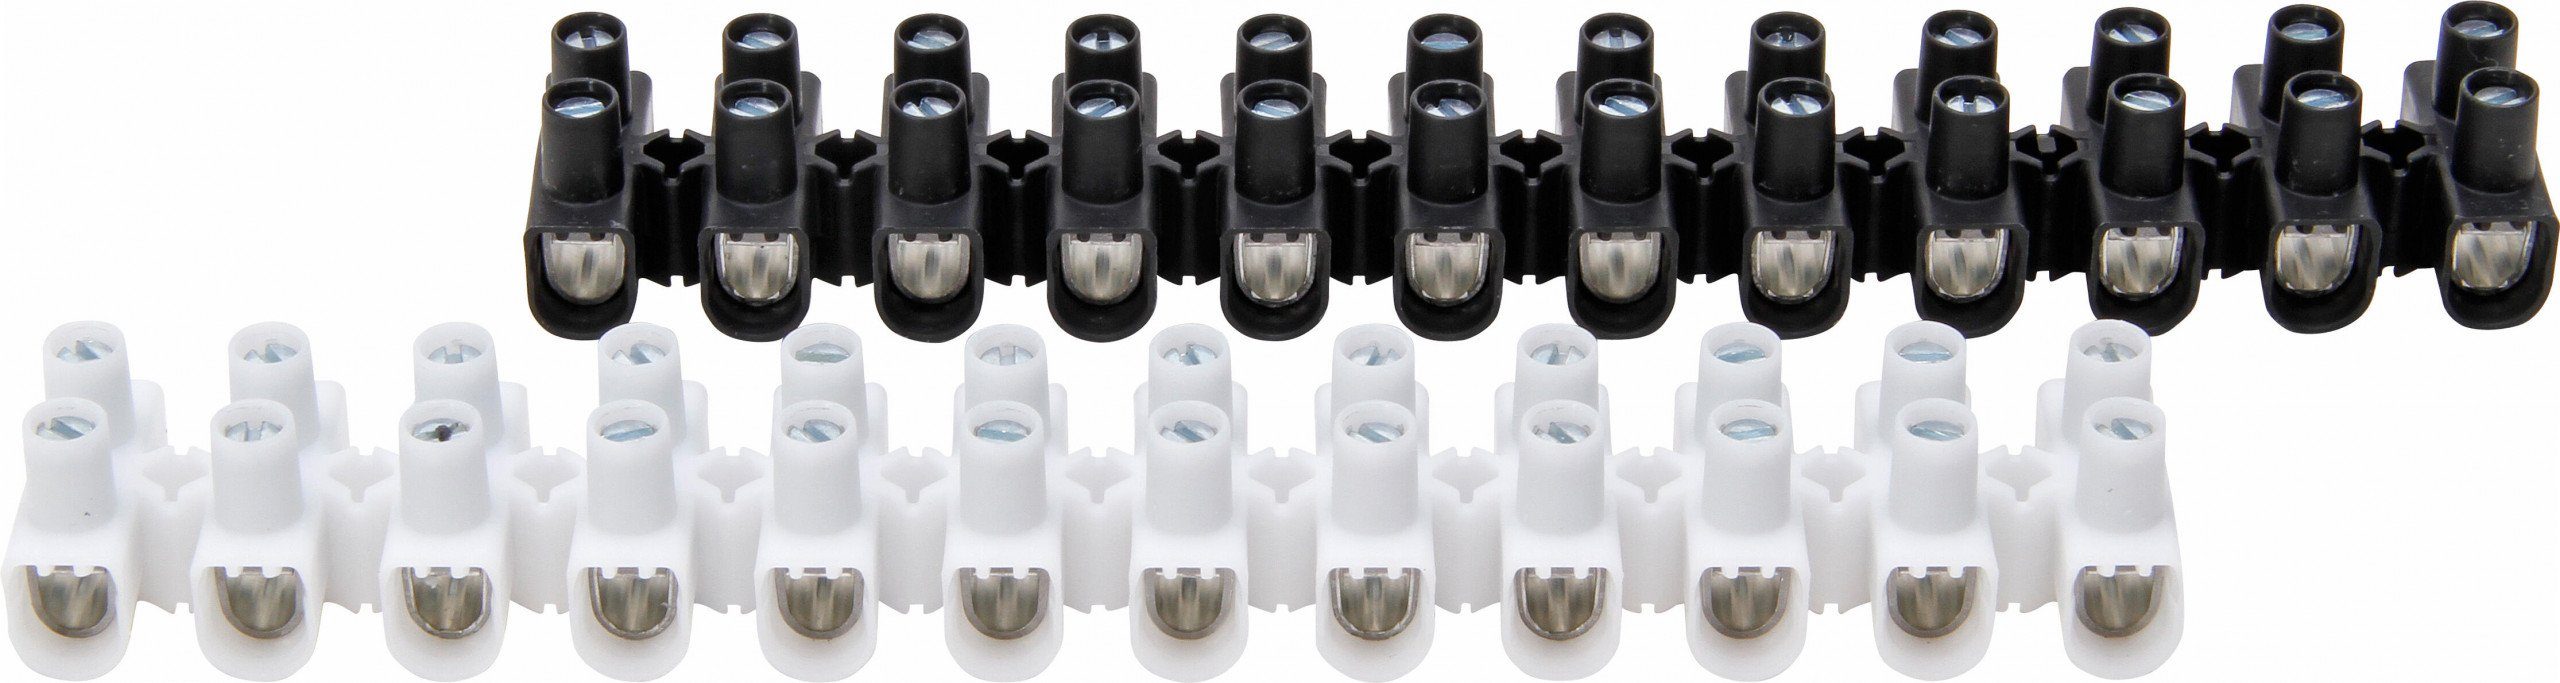 Kopp Kabelverbinder-Sortiment Lüsterklemmleiste, 12-polig, 4-16mm², weiß/schwarz, 2 Stück, 2 Stück